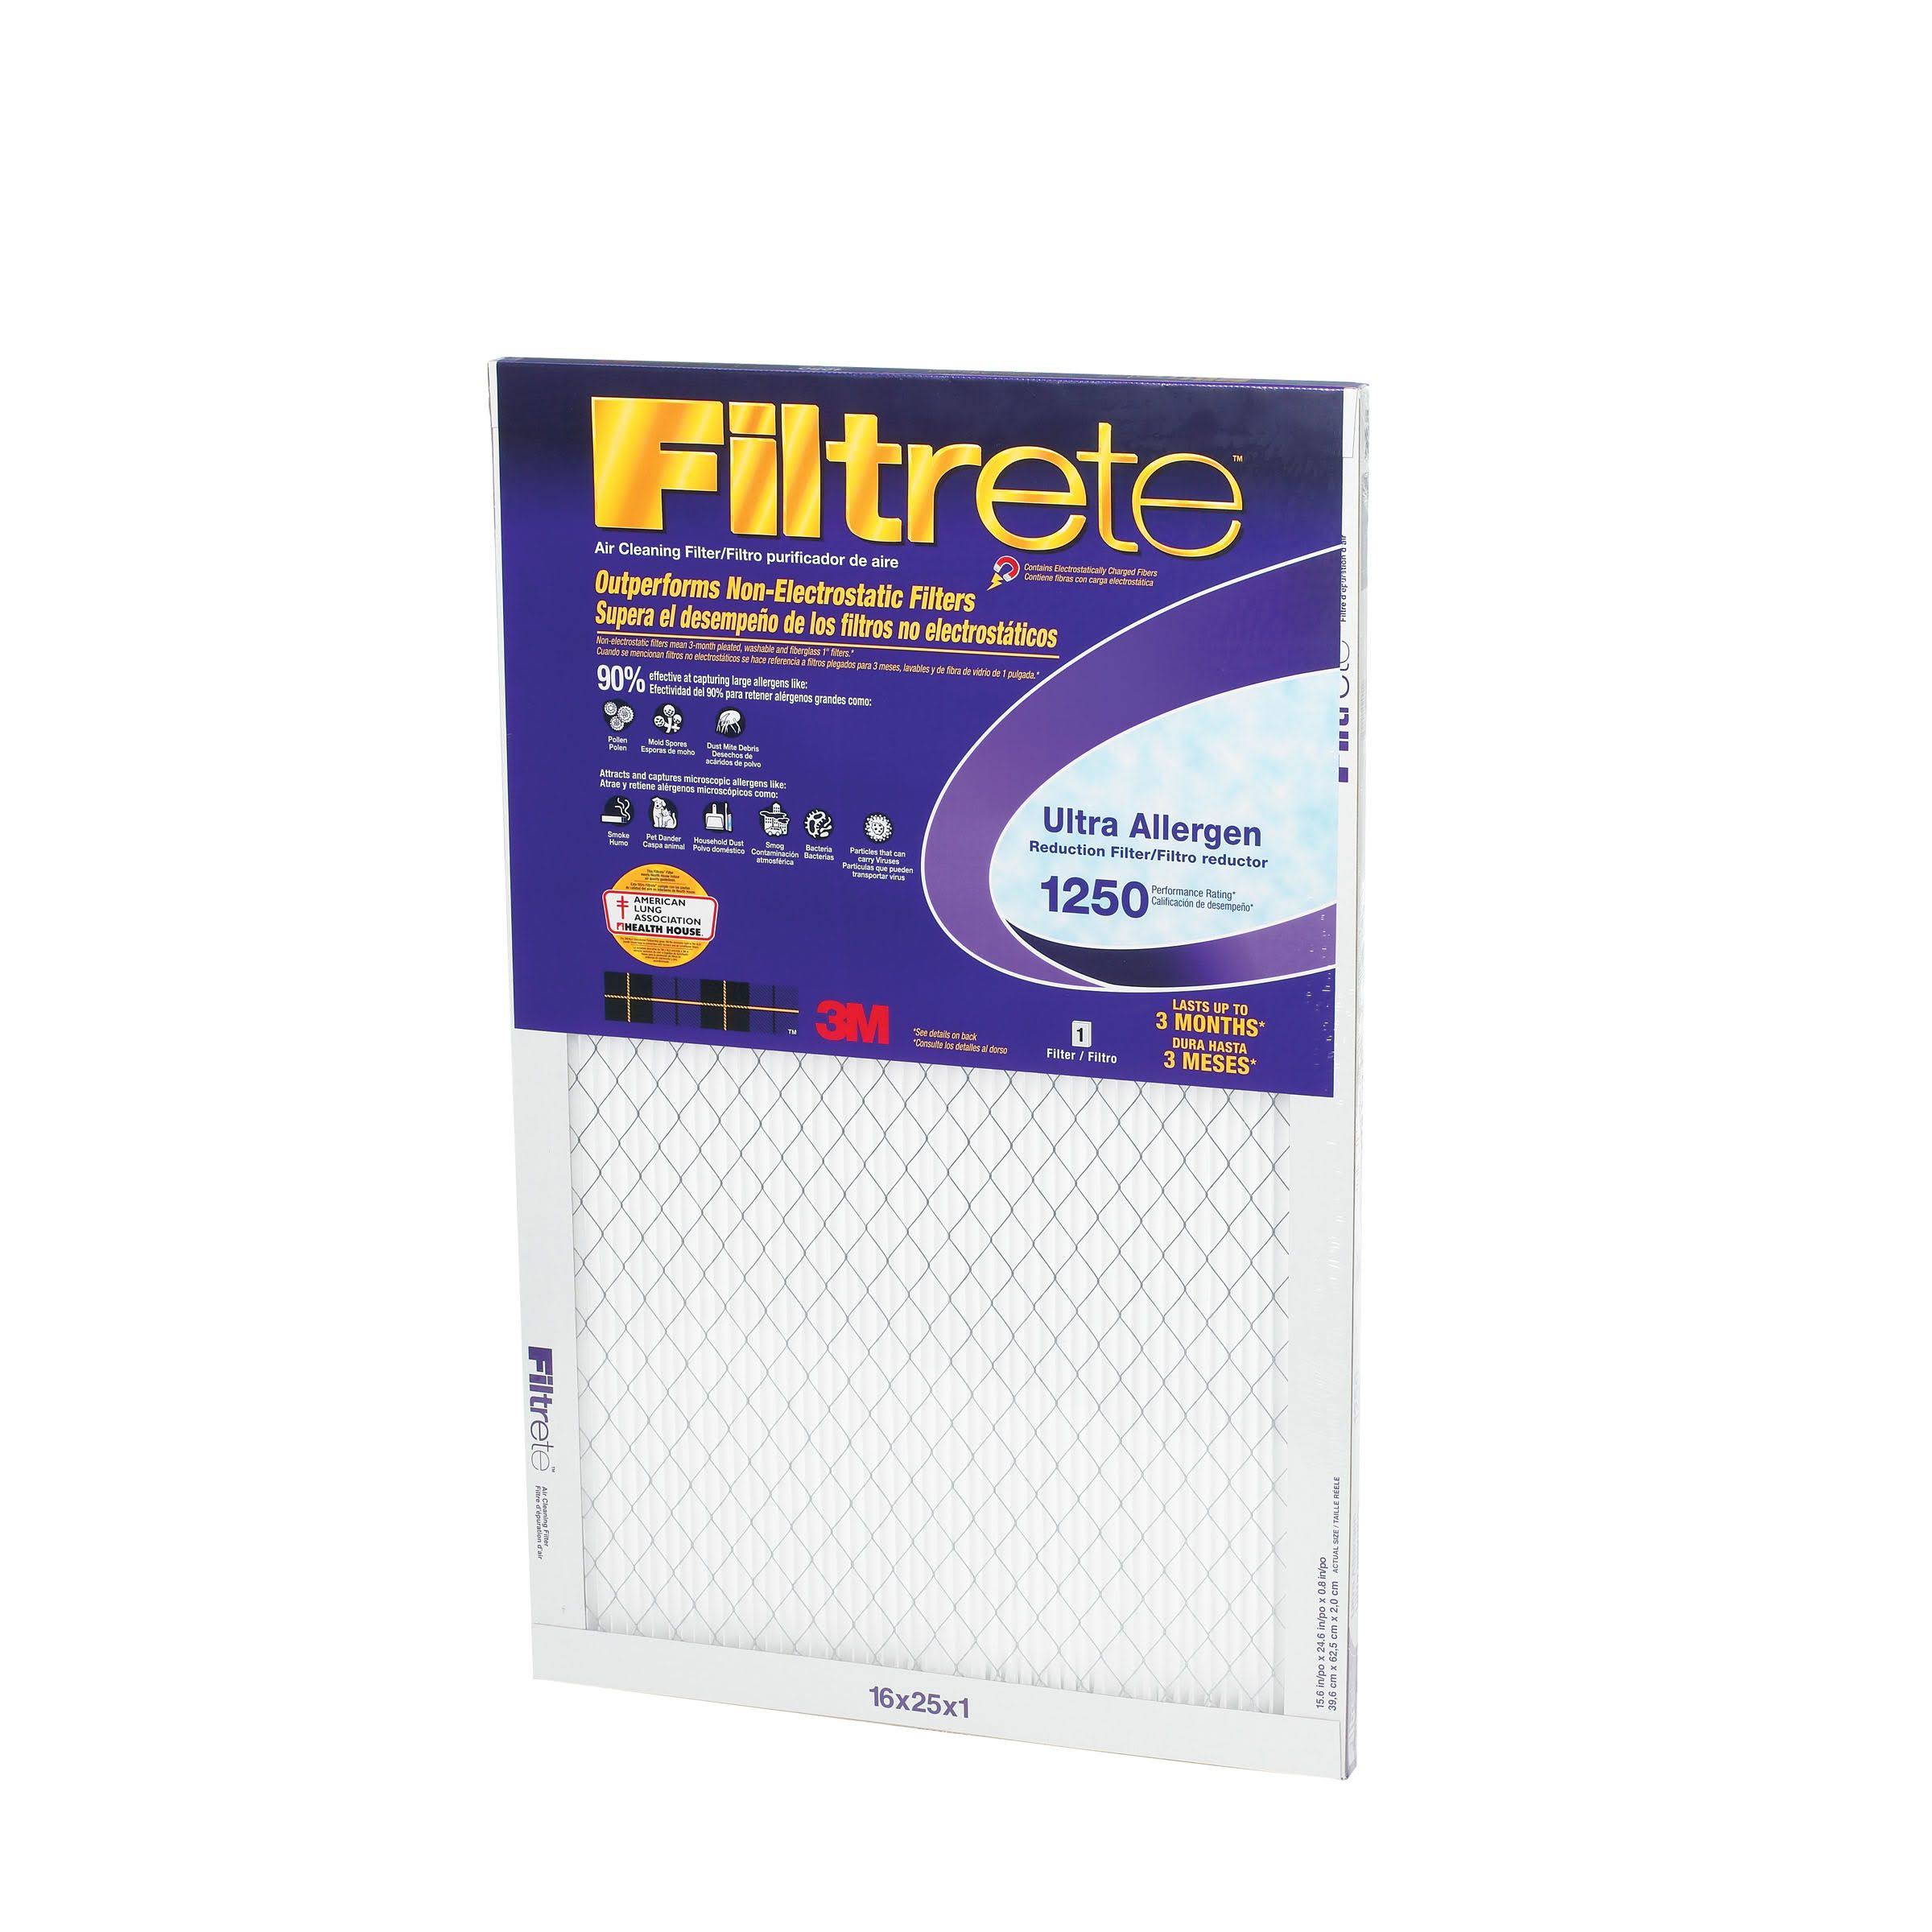 3M Filtrete Air Cleaning Filter - Ultra Allergen, 16"x25"x1"